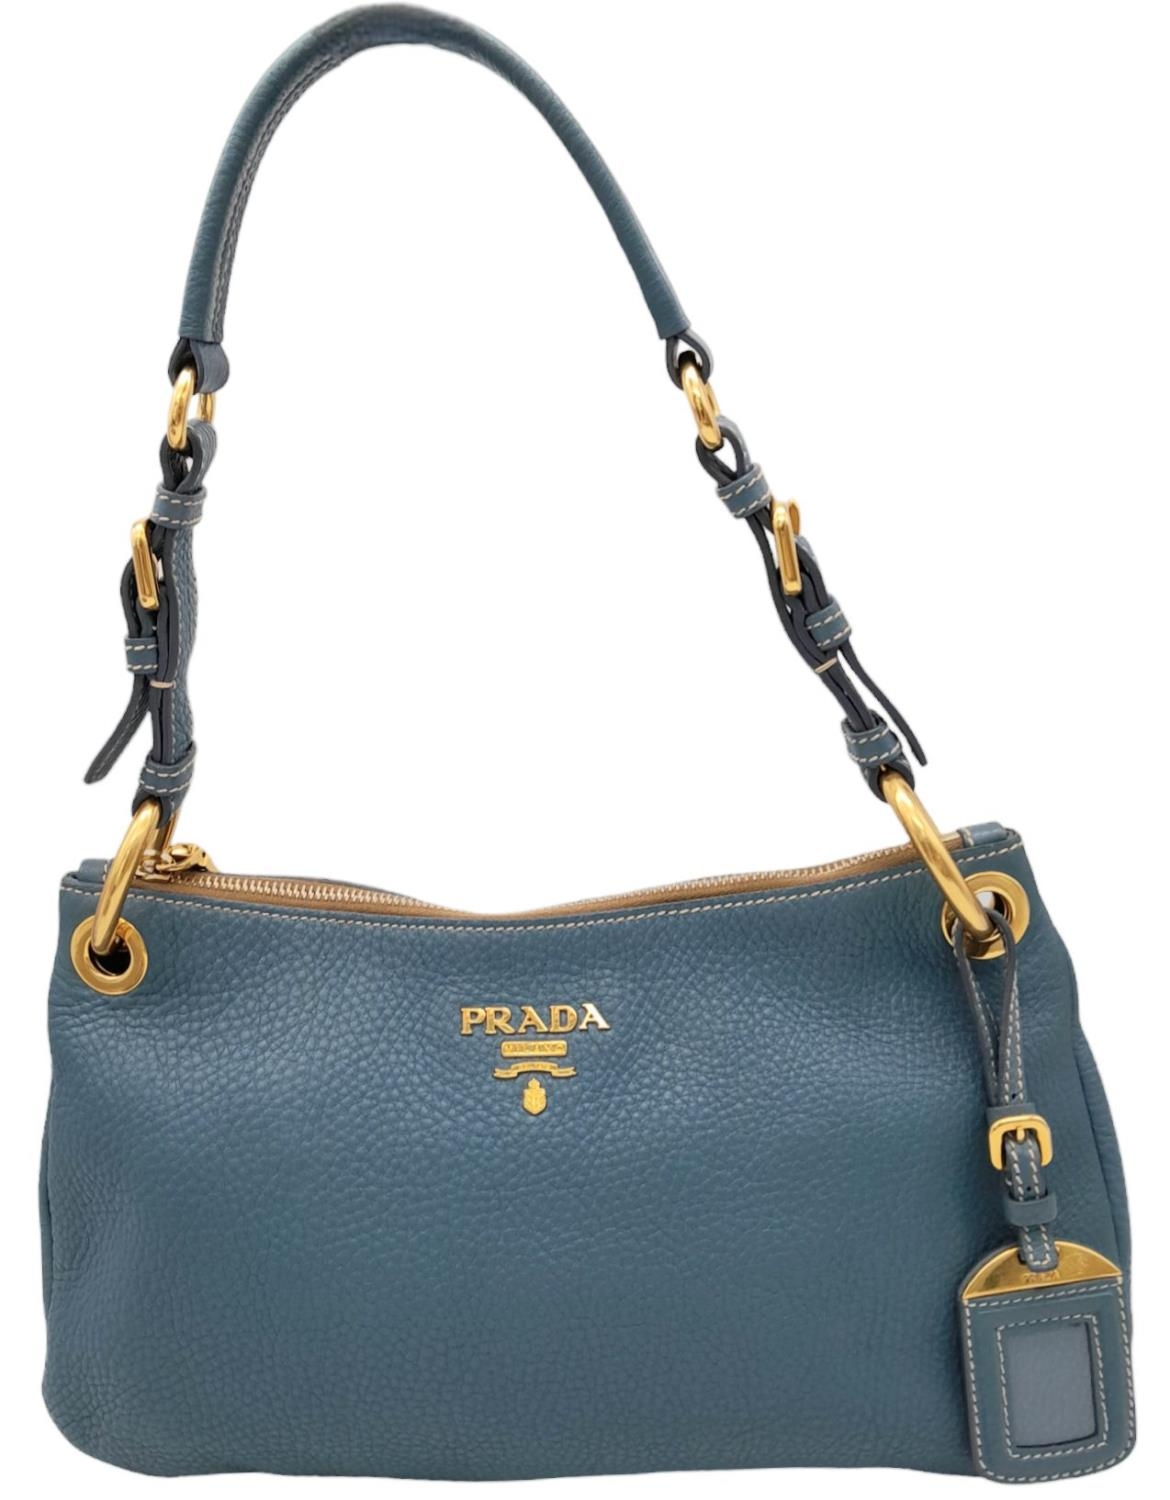 A Prada Marine Blue Vitello Daino Shoulder Bag. Leather exterior with gold-toned hardware,